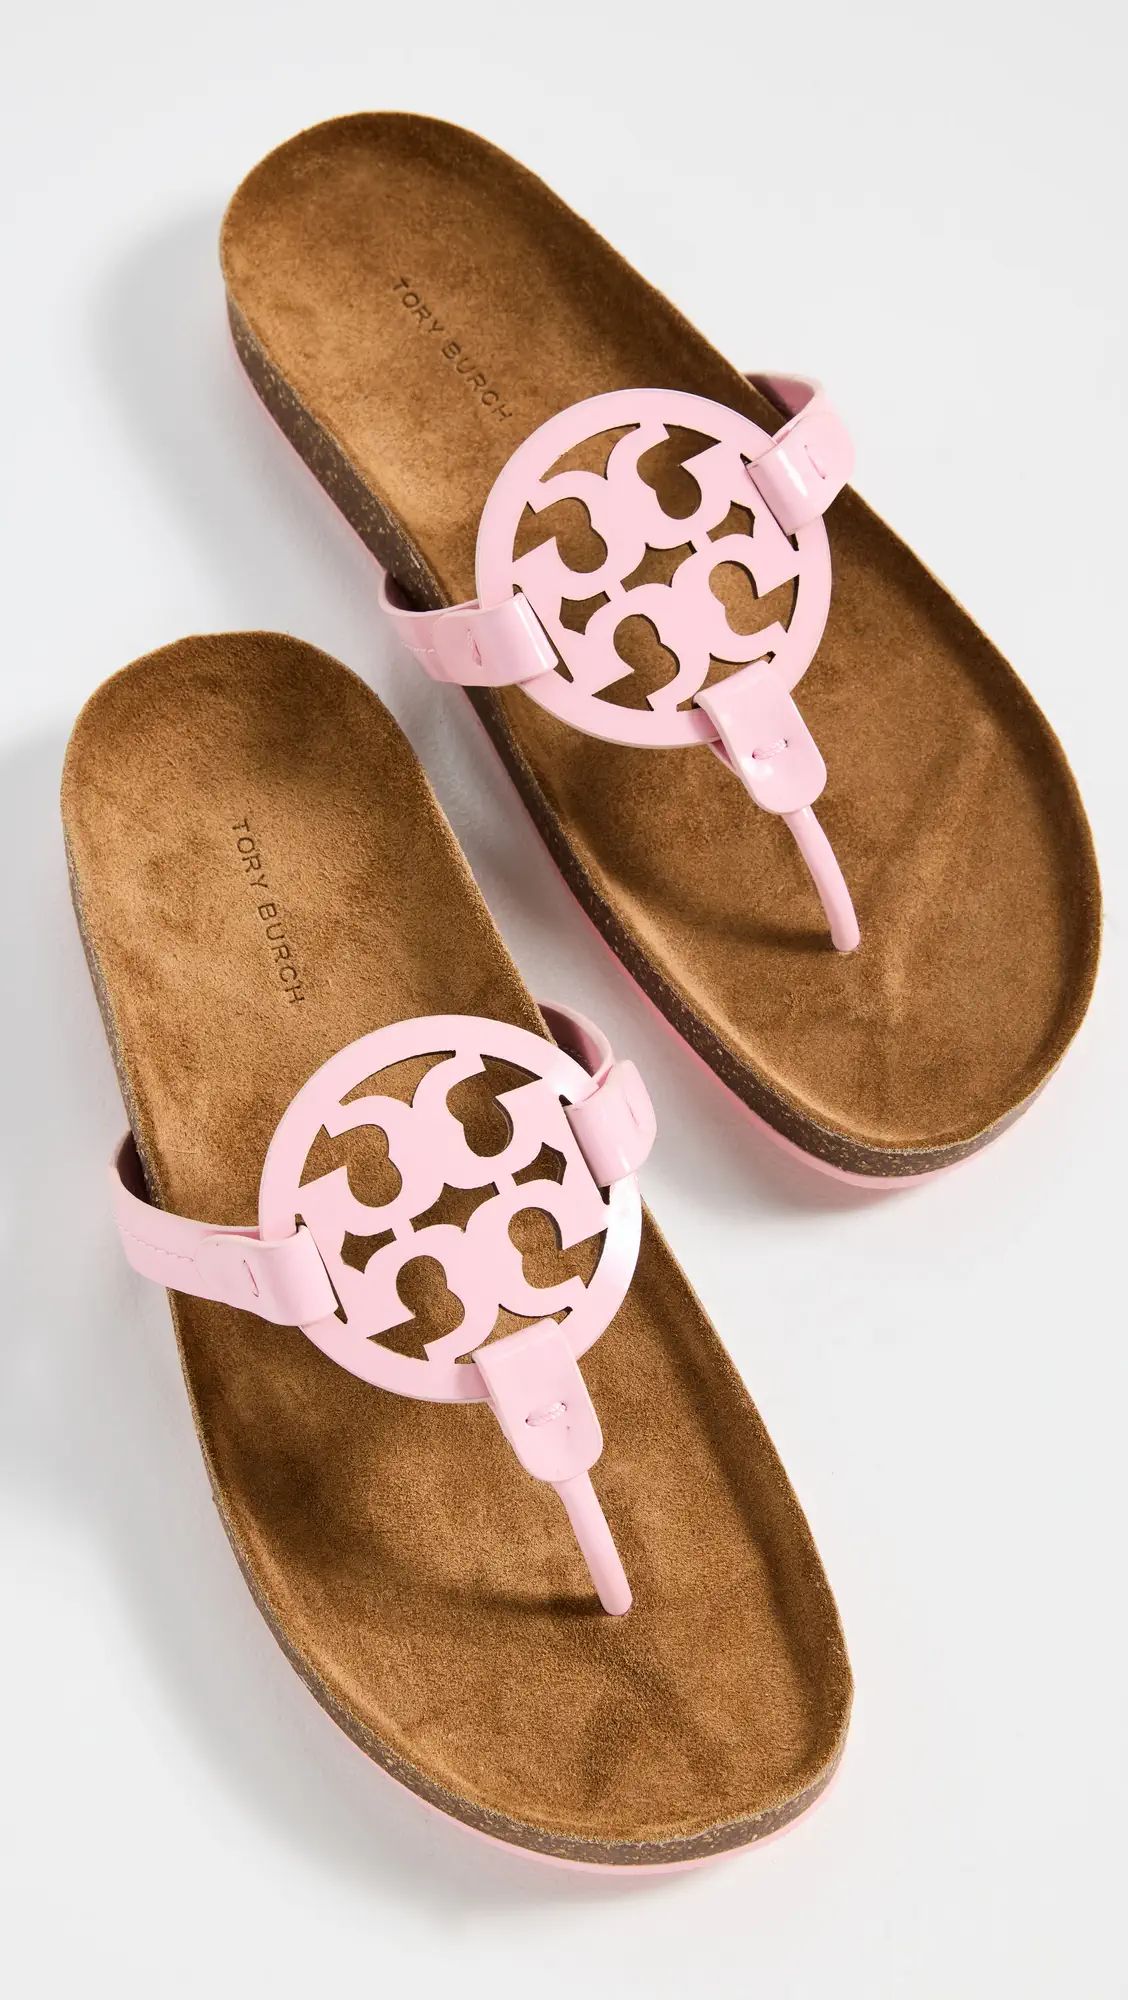 Miller Cloud Sandals | Shopbop